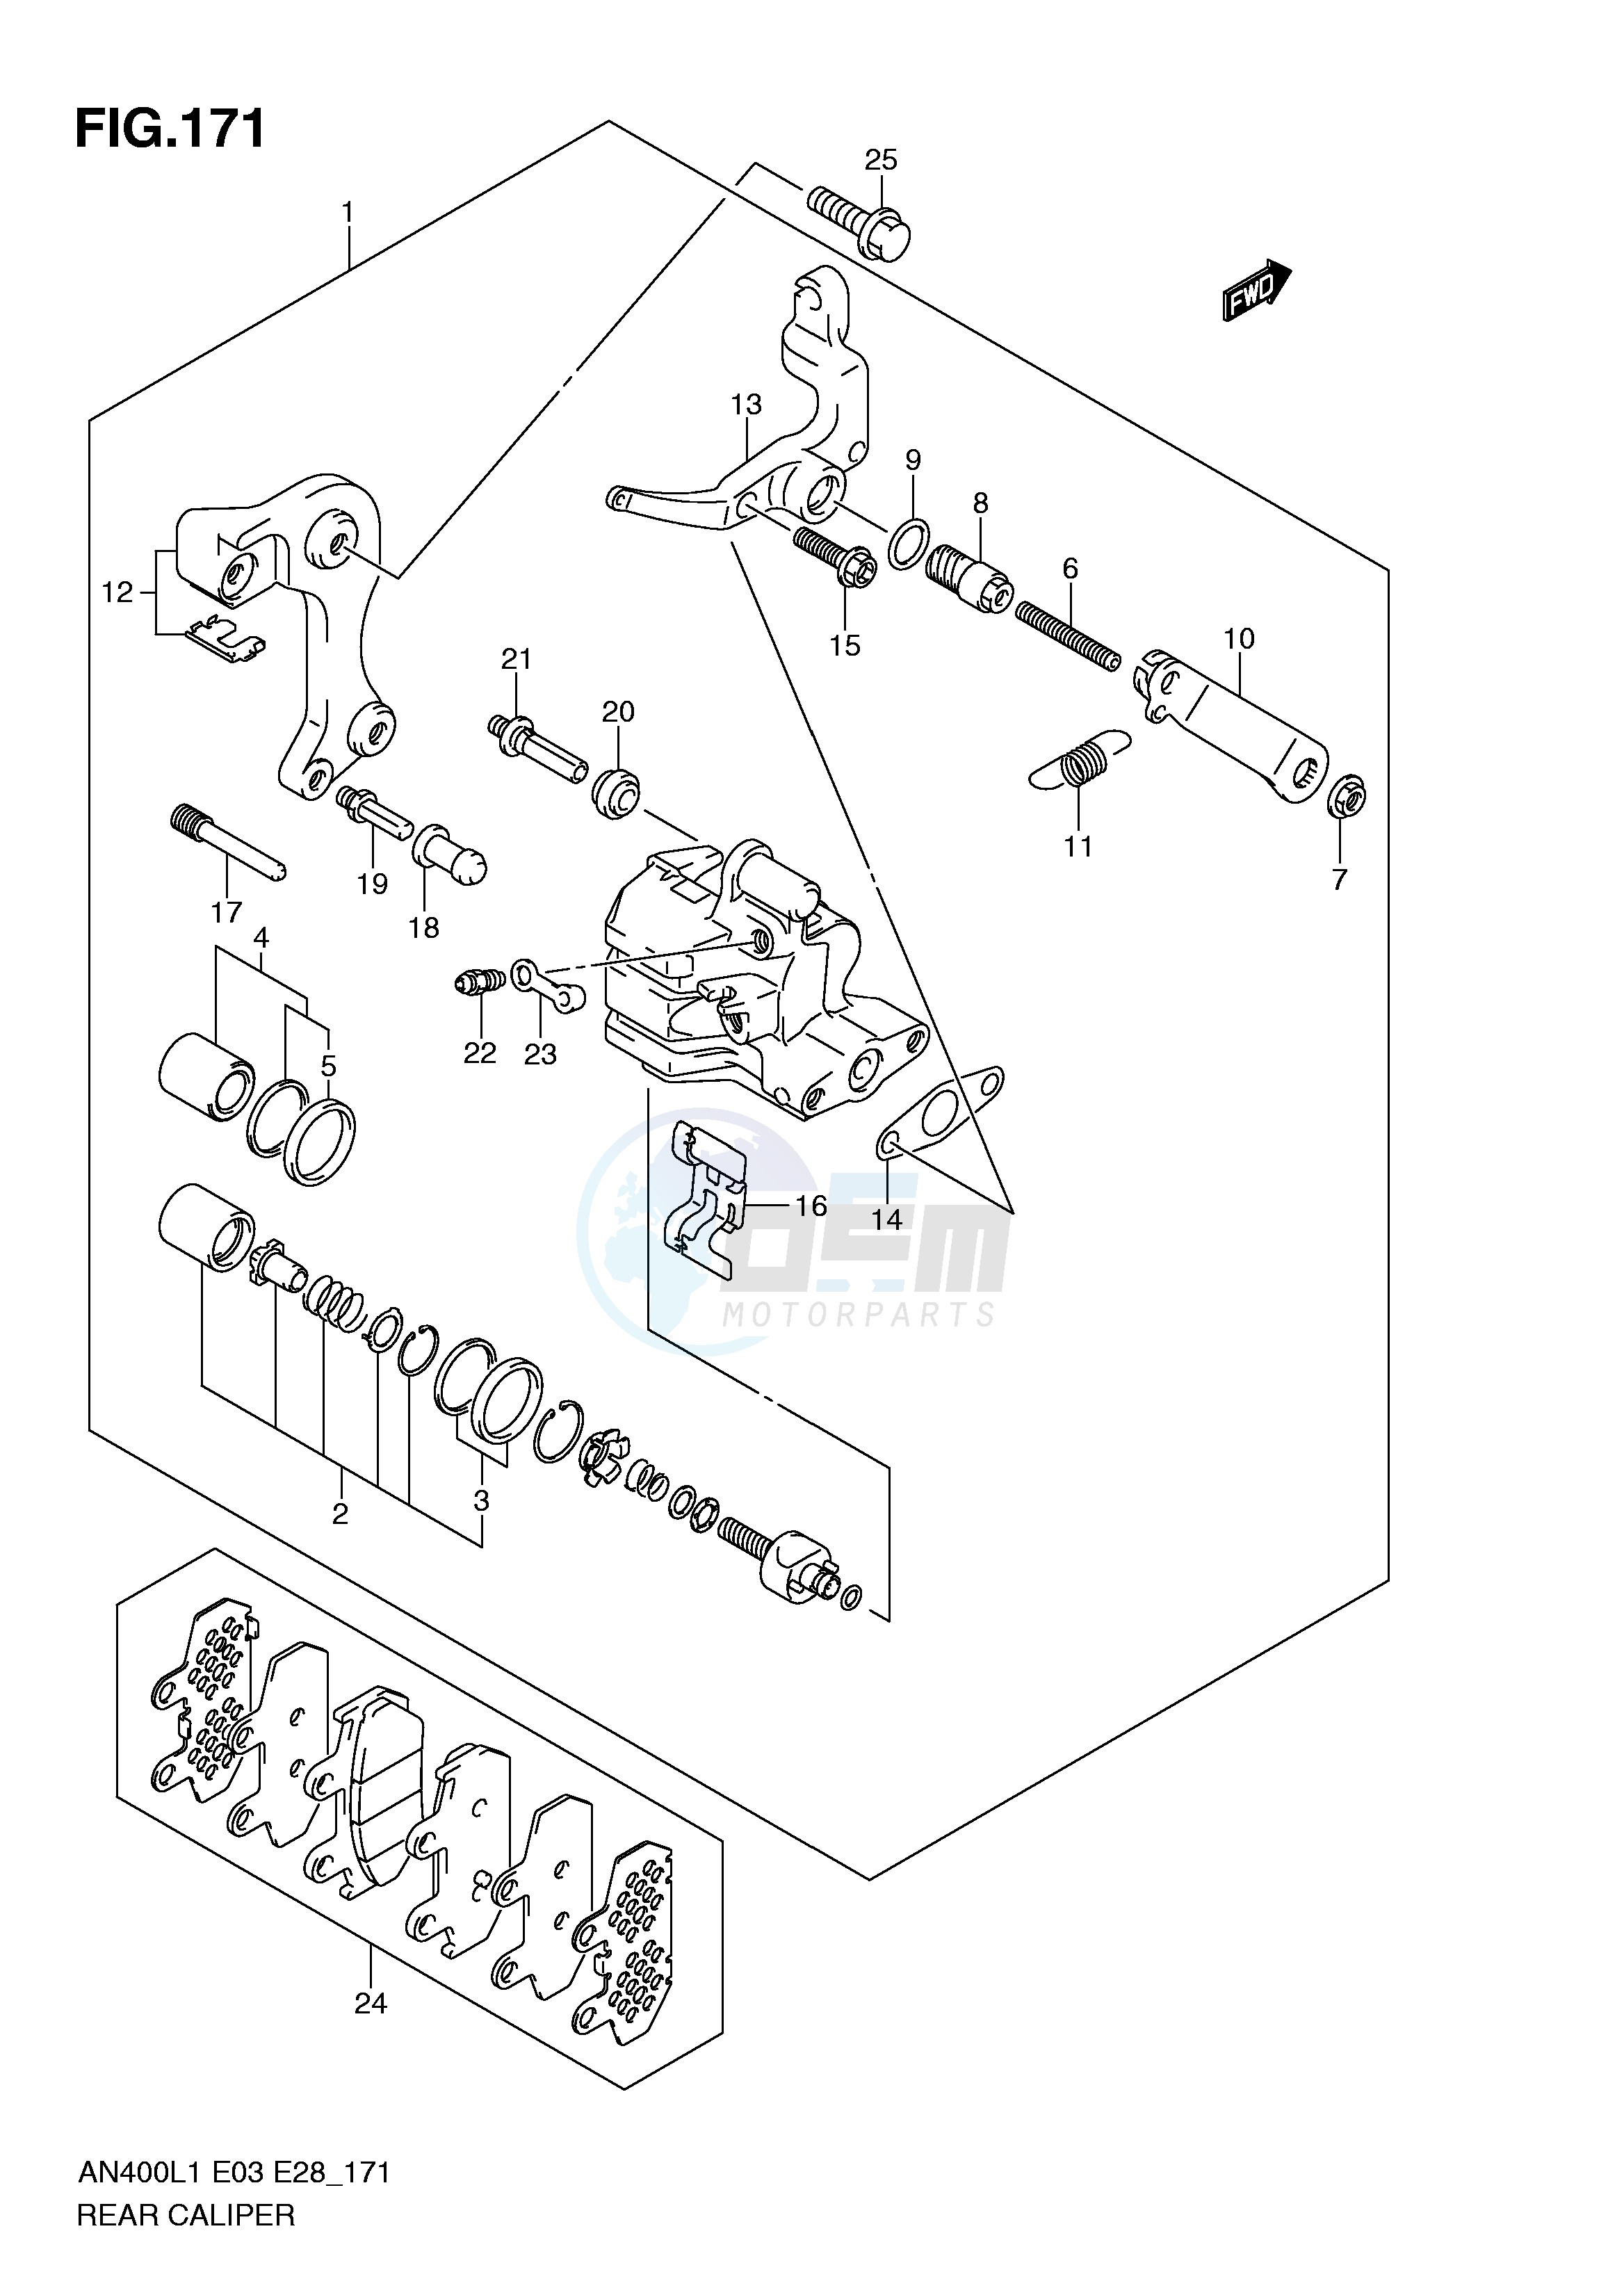 REAR CALIPER (AN400AL1 E33) blueprint